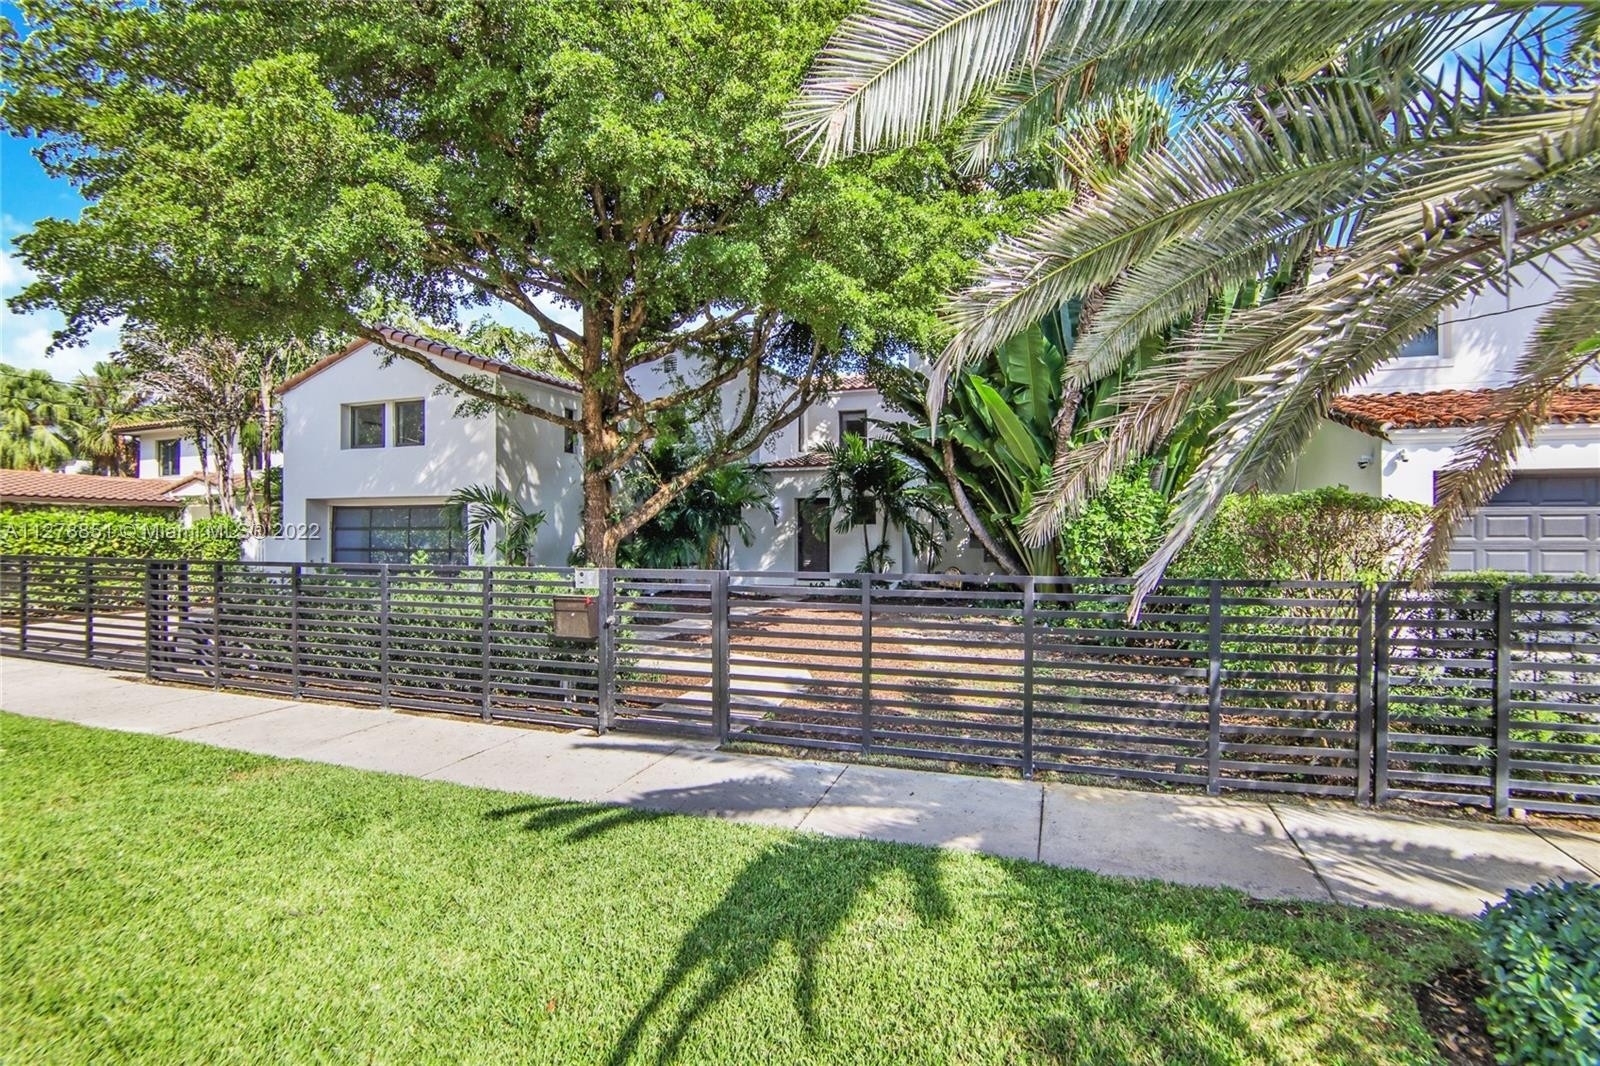 Property at La Gorce Country Club, Miami Beach, FL 33140